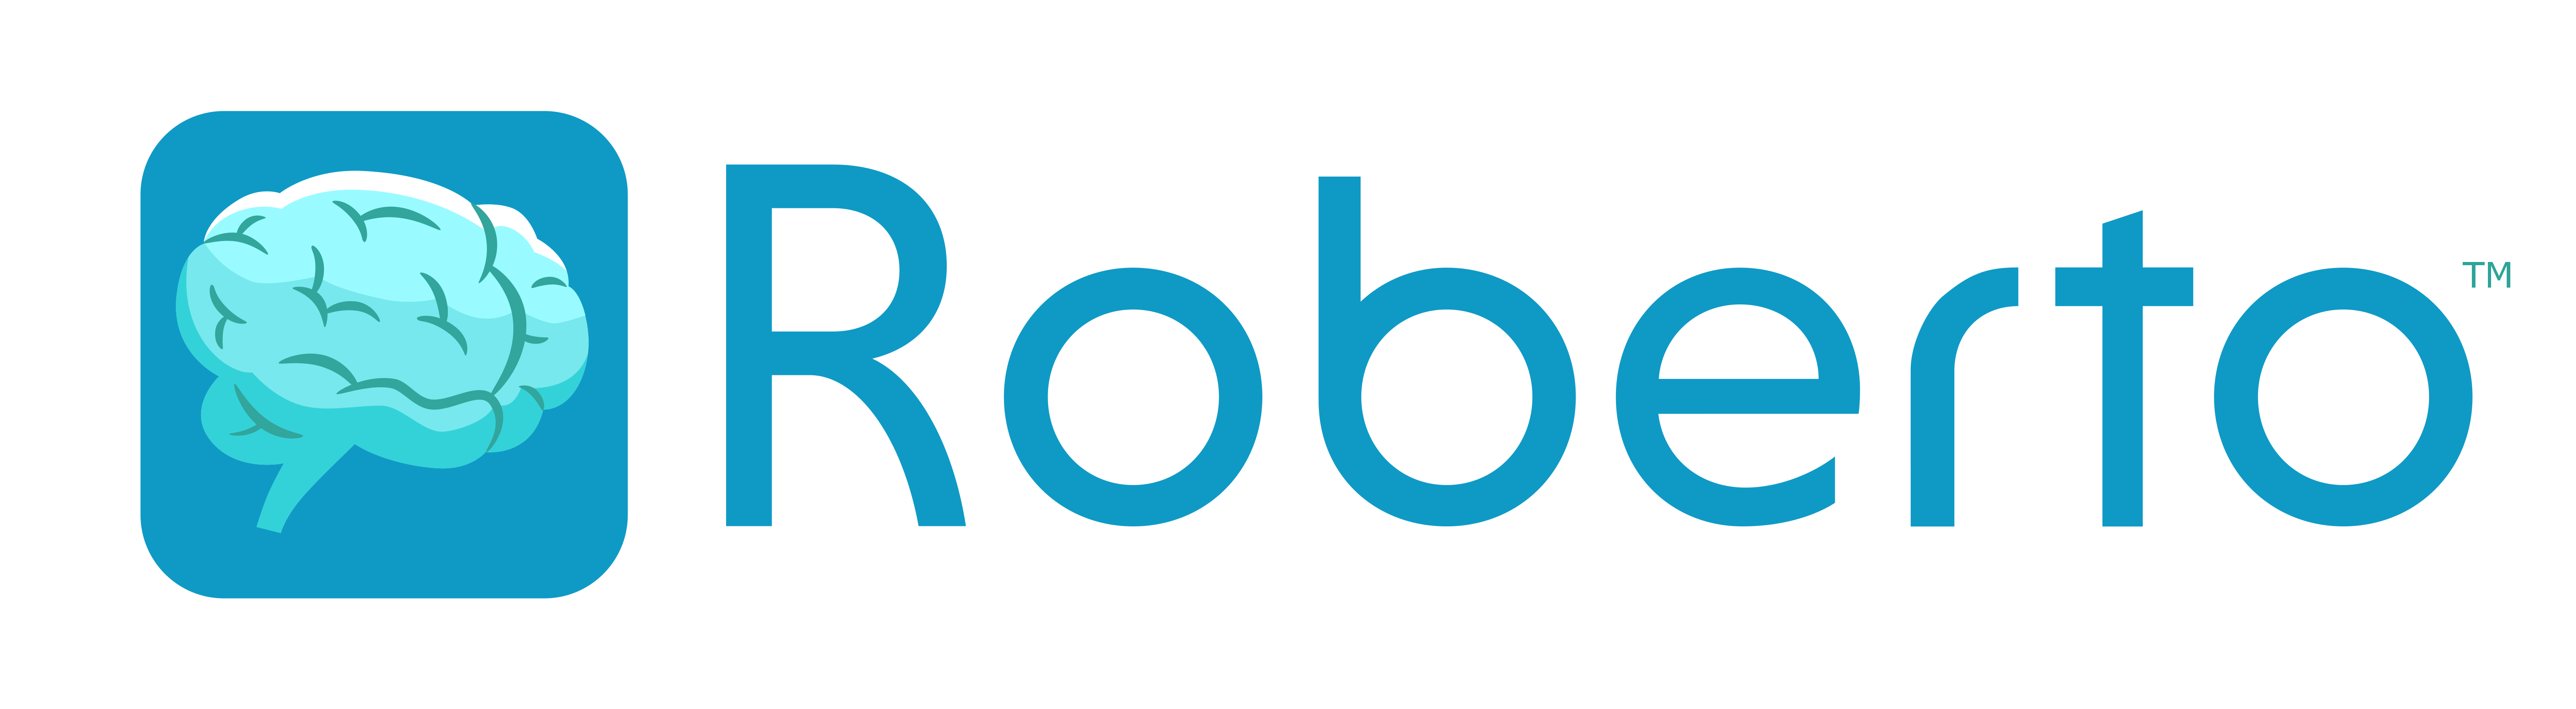 Roberto logo color resized